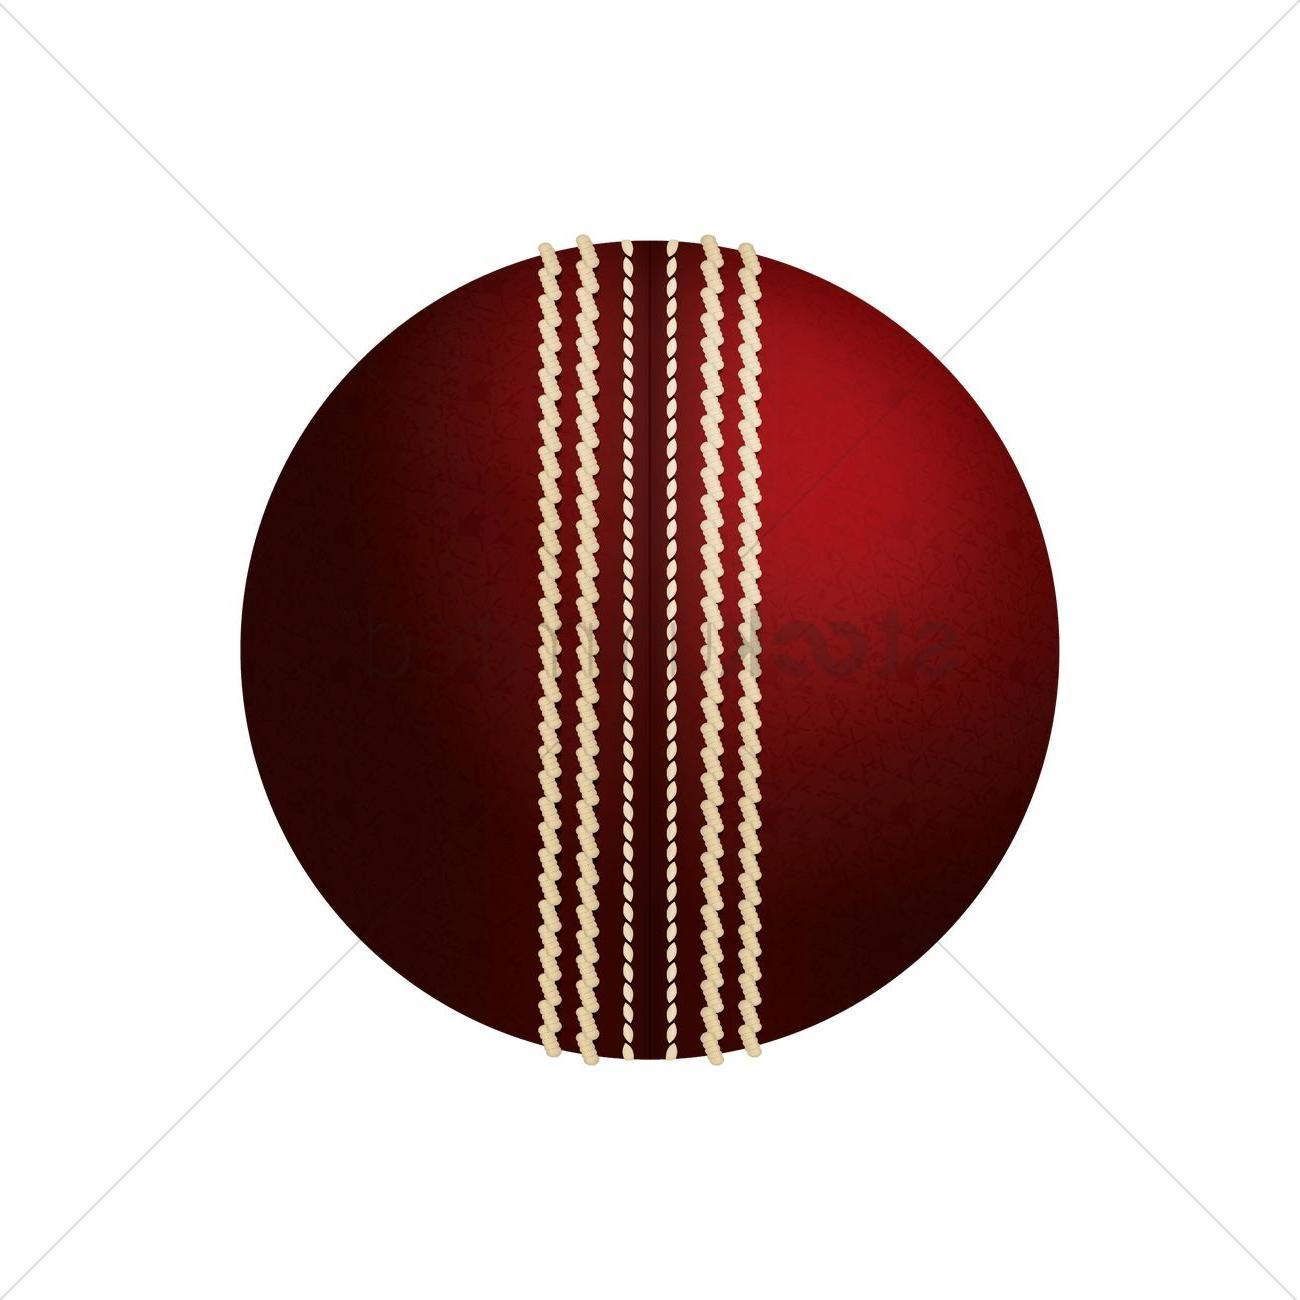 Cricket Ball Logo - Best Free Cricket Ball Logo Vector Image Free Vector Art, Image